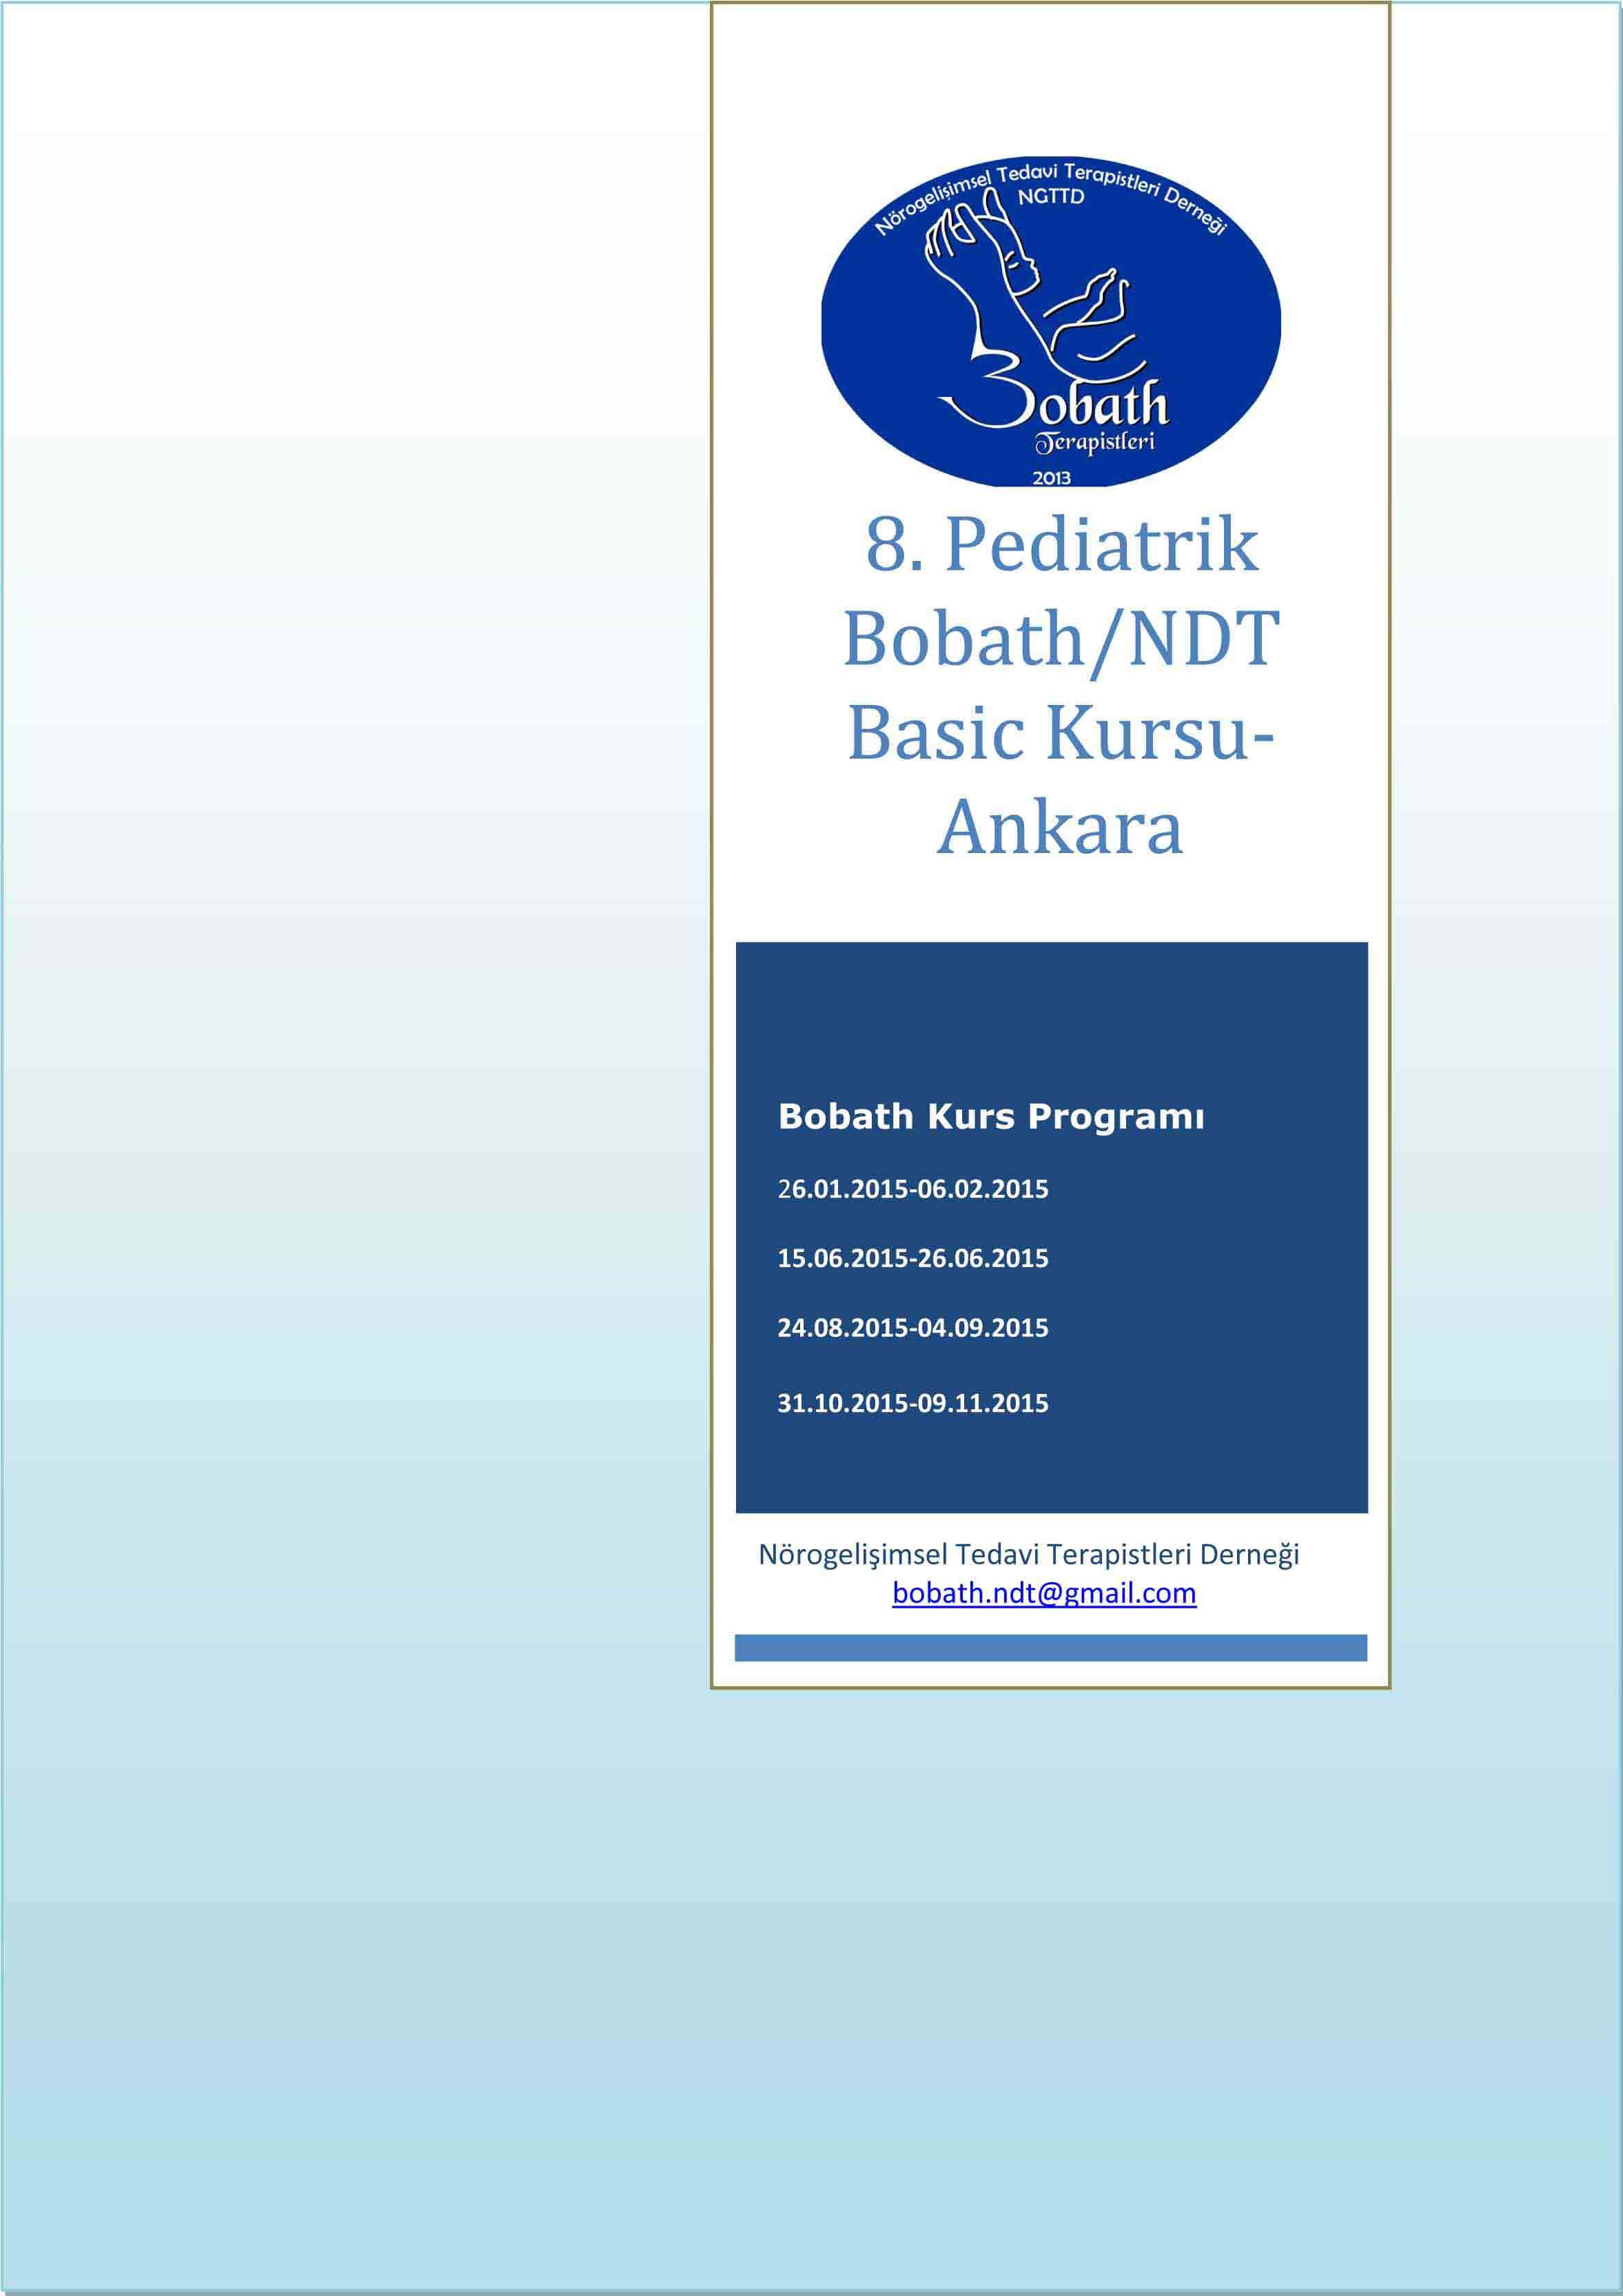 8. Pediatrik Bobath/NDT Basic